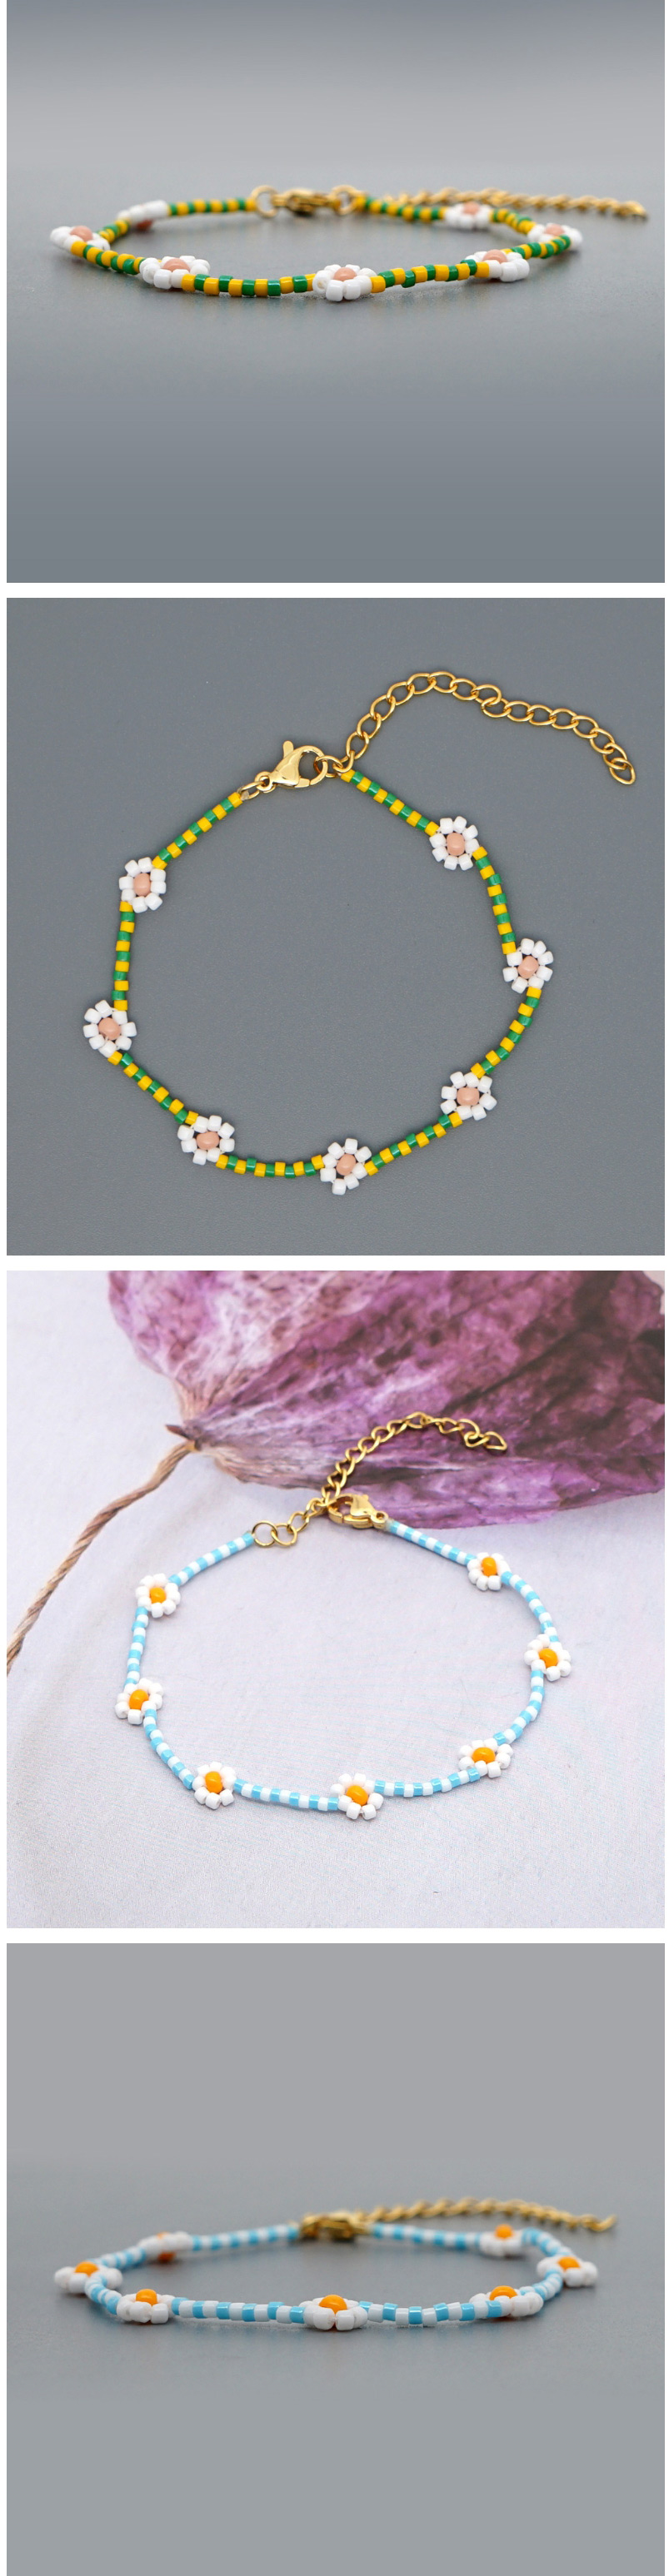 Fashion Red + Blue Imported Rice Beads Hand-woven Flower Bracelet,Beaded Bracelet